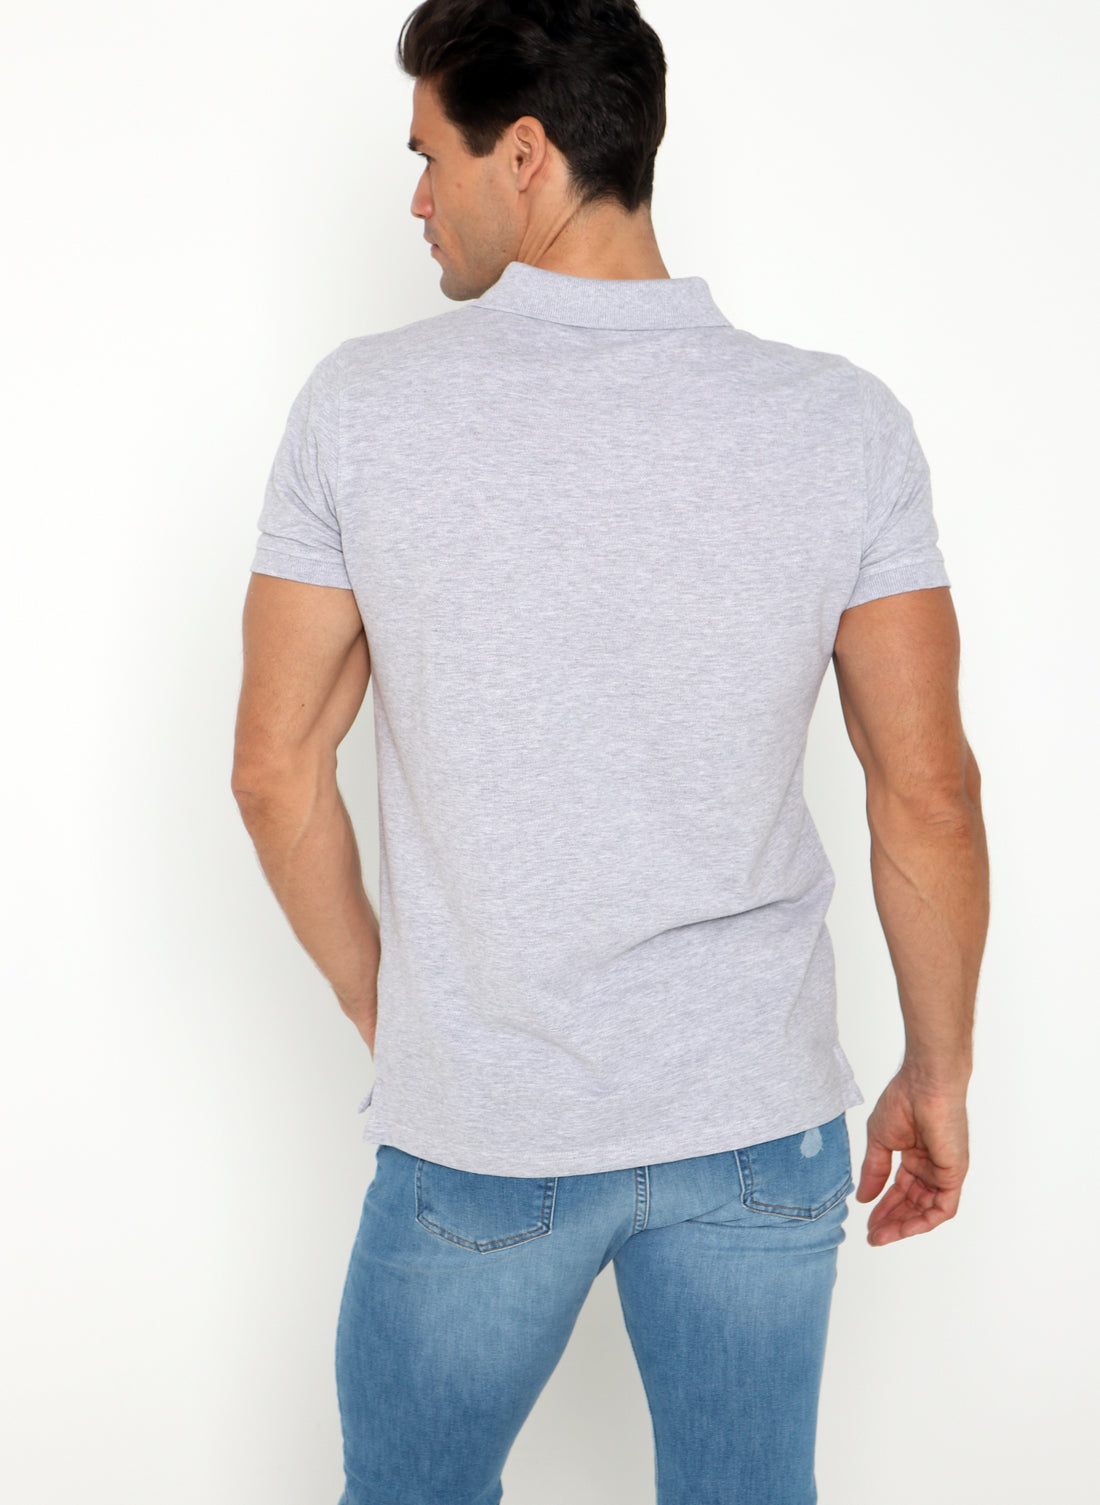 Men's Light Gray Polo Shirt